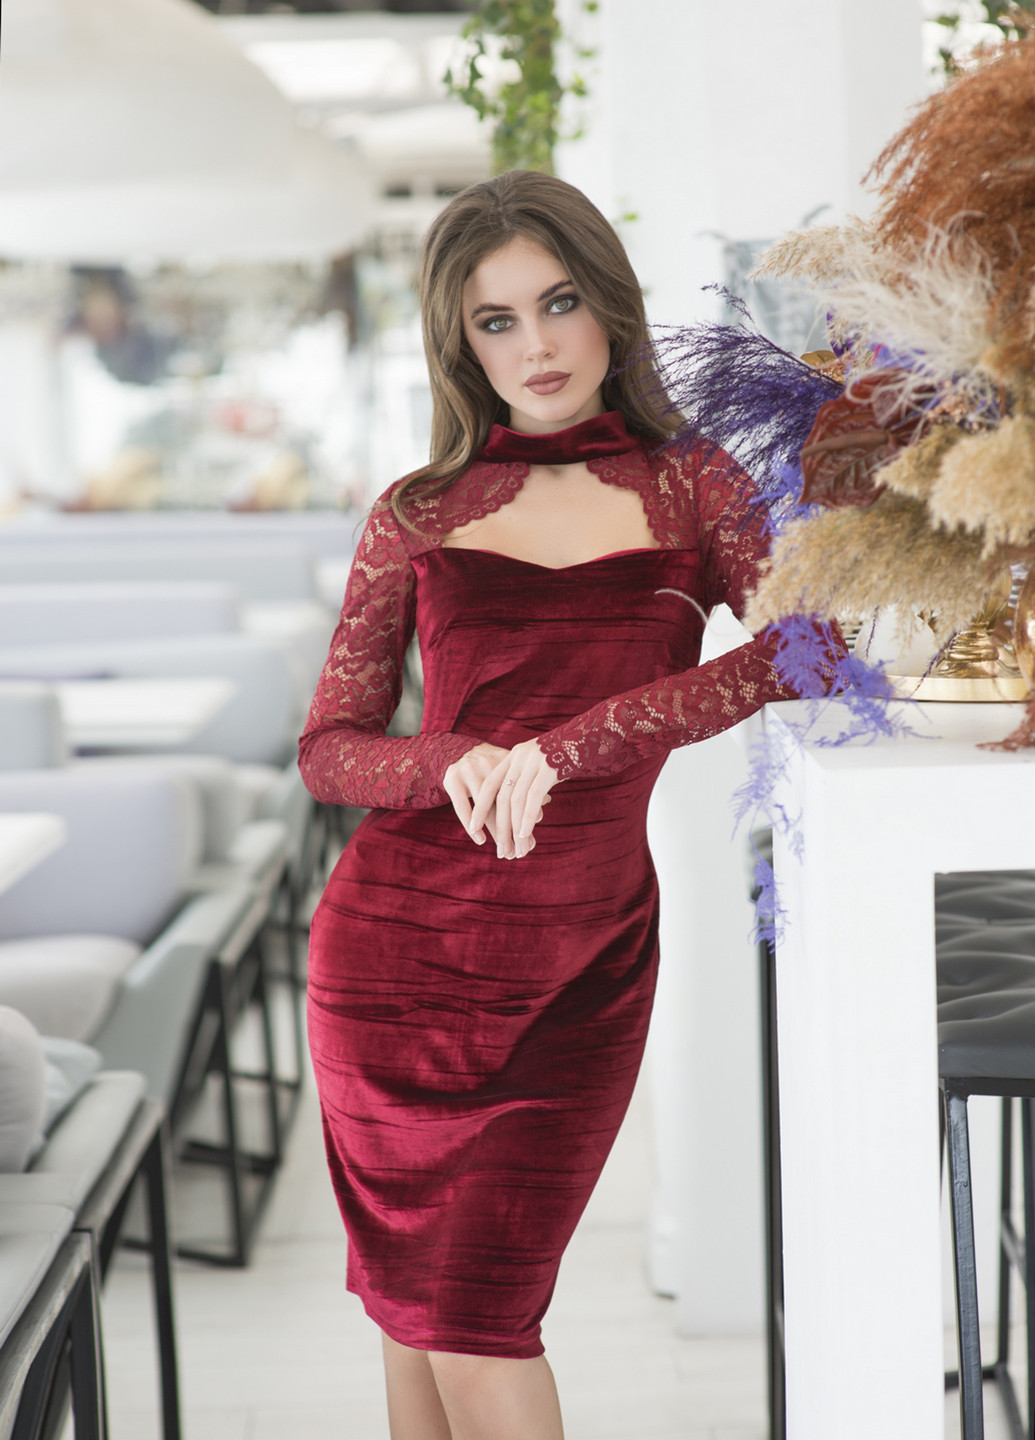 Бордовое вечернее платье футляр Lady Style однотонное